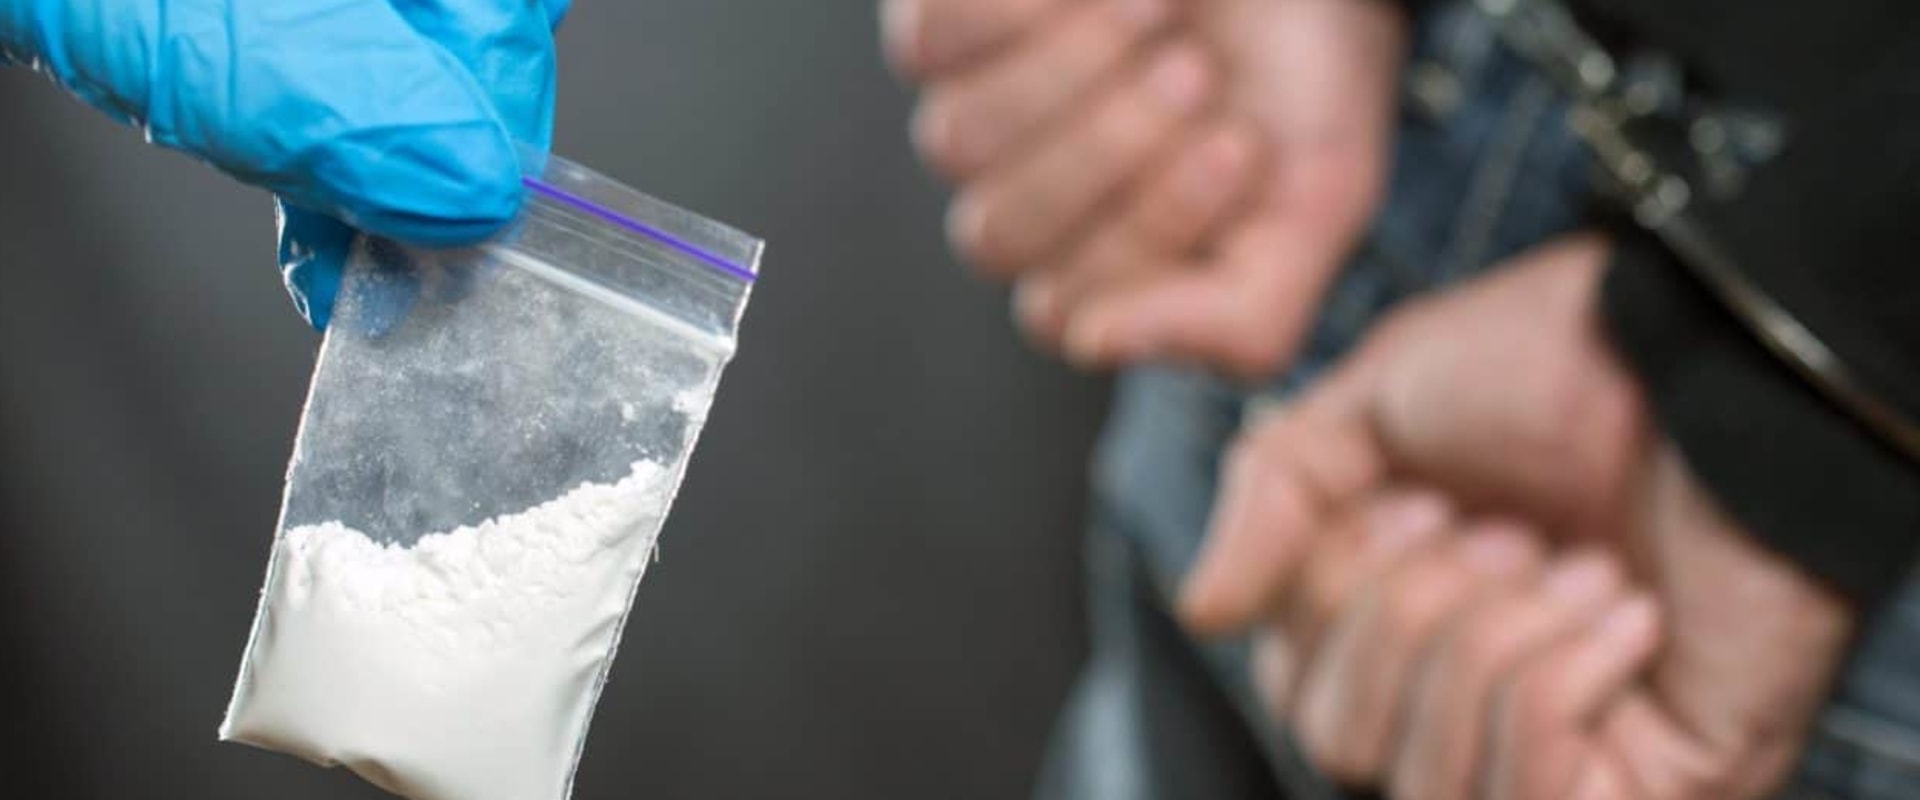 Is drug possession a felony in arizona?